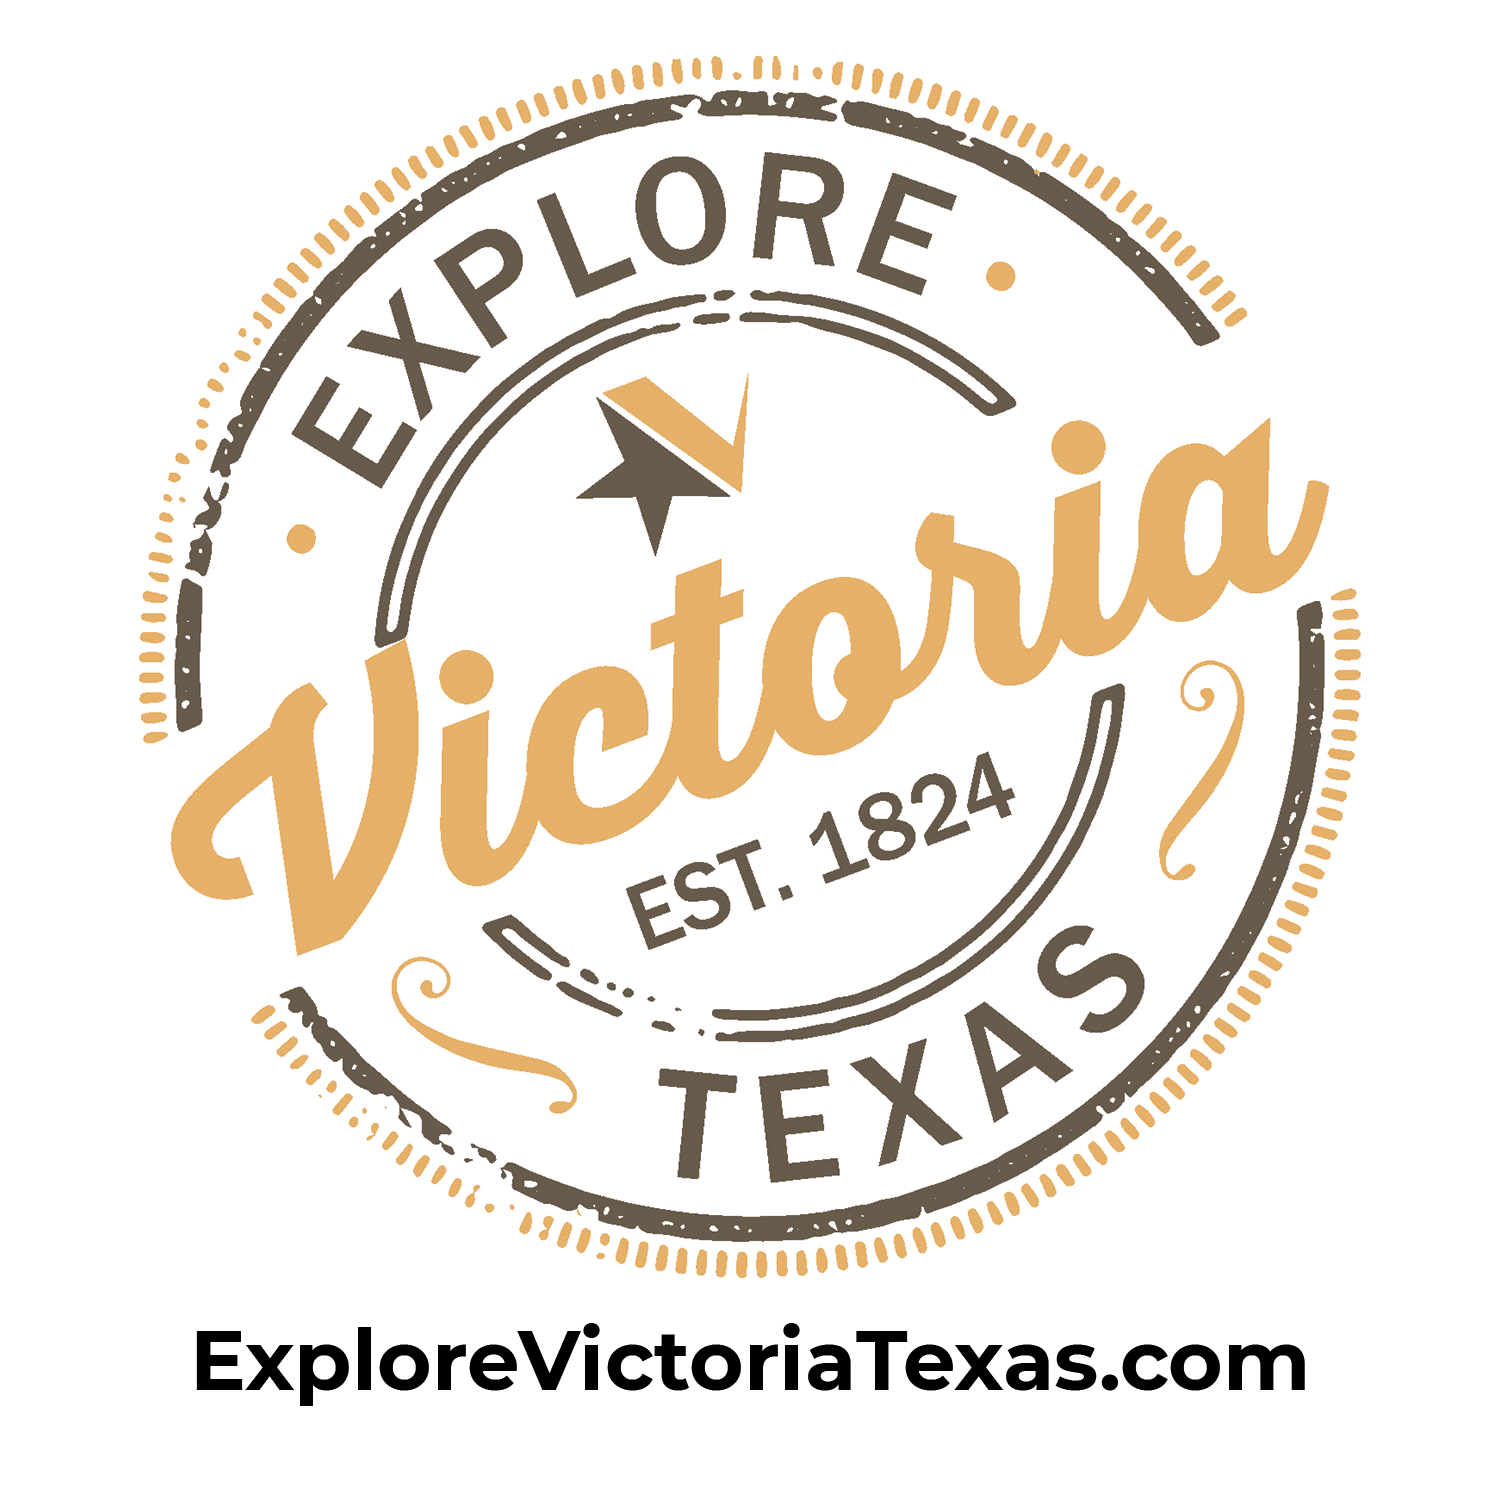 Explore Victoria Texas